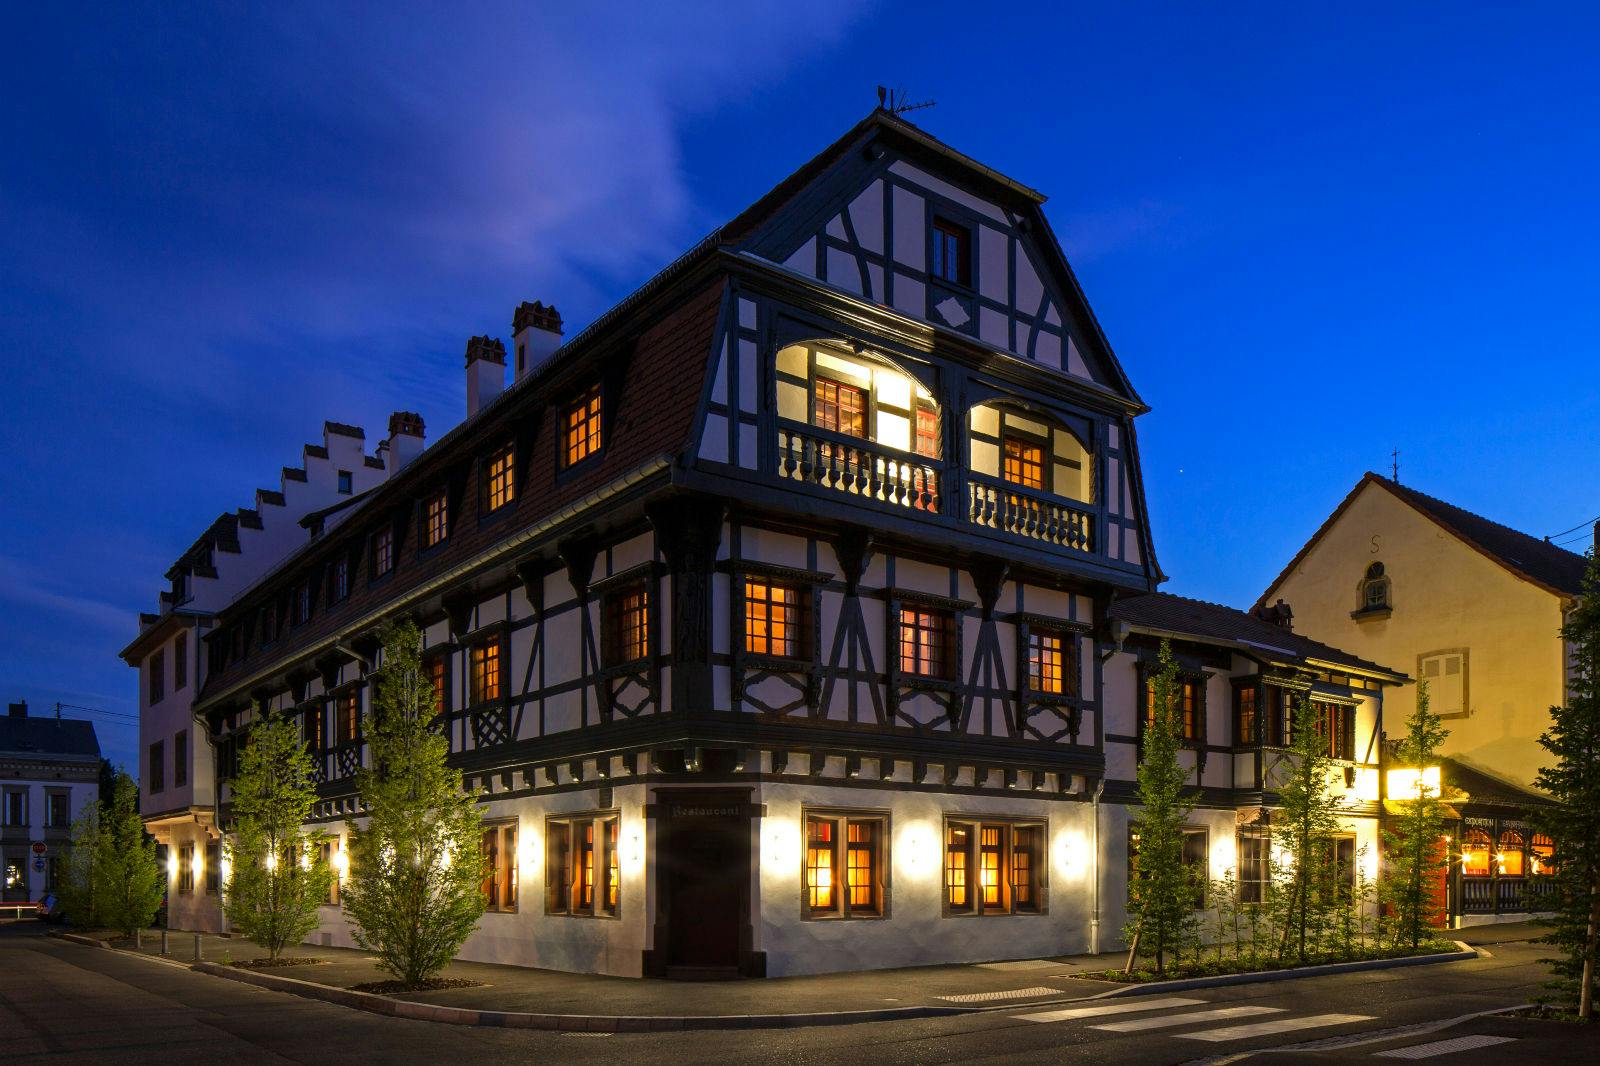 Das Zwei-Sterne-Restaurant „La Fourchette des Ducs“ in Obernai, Frankreich.